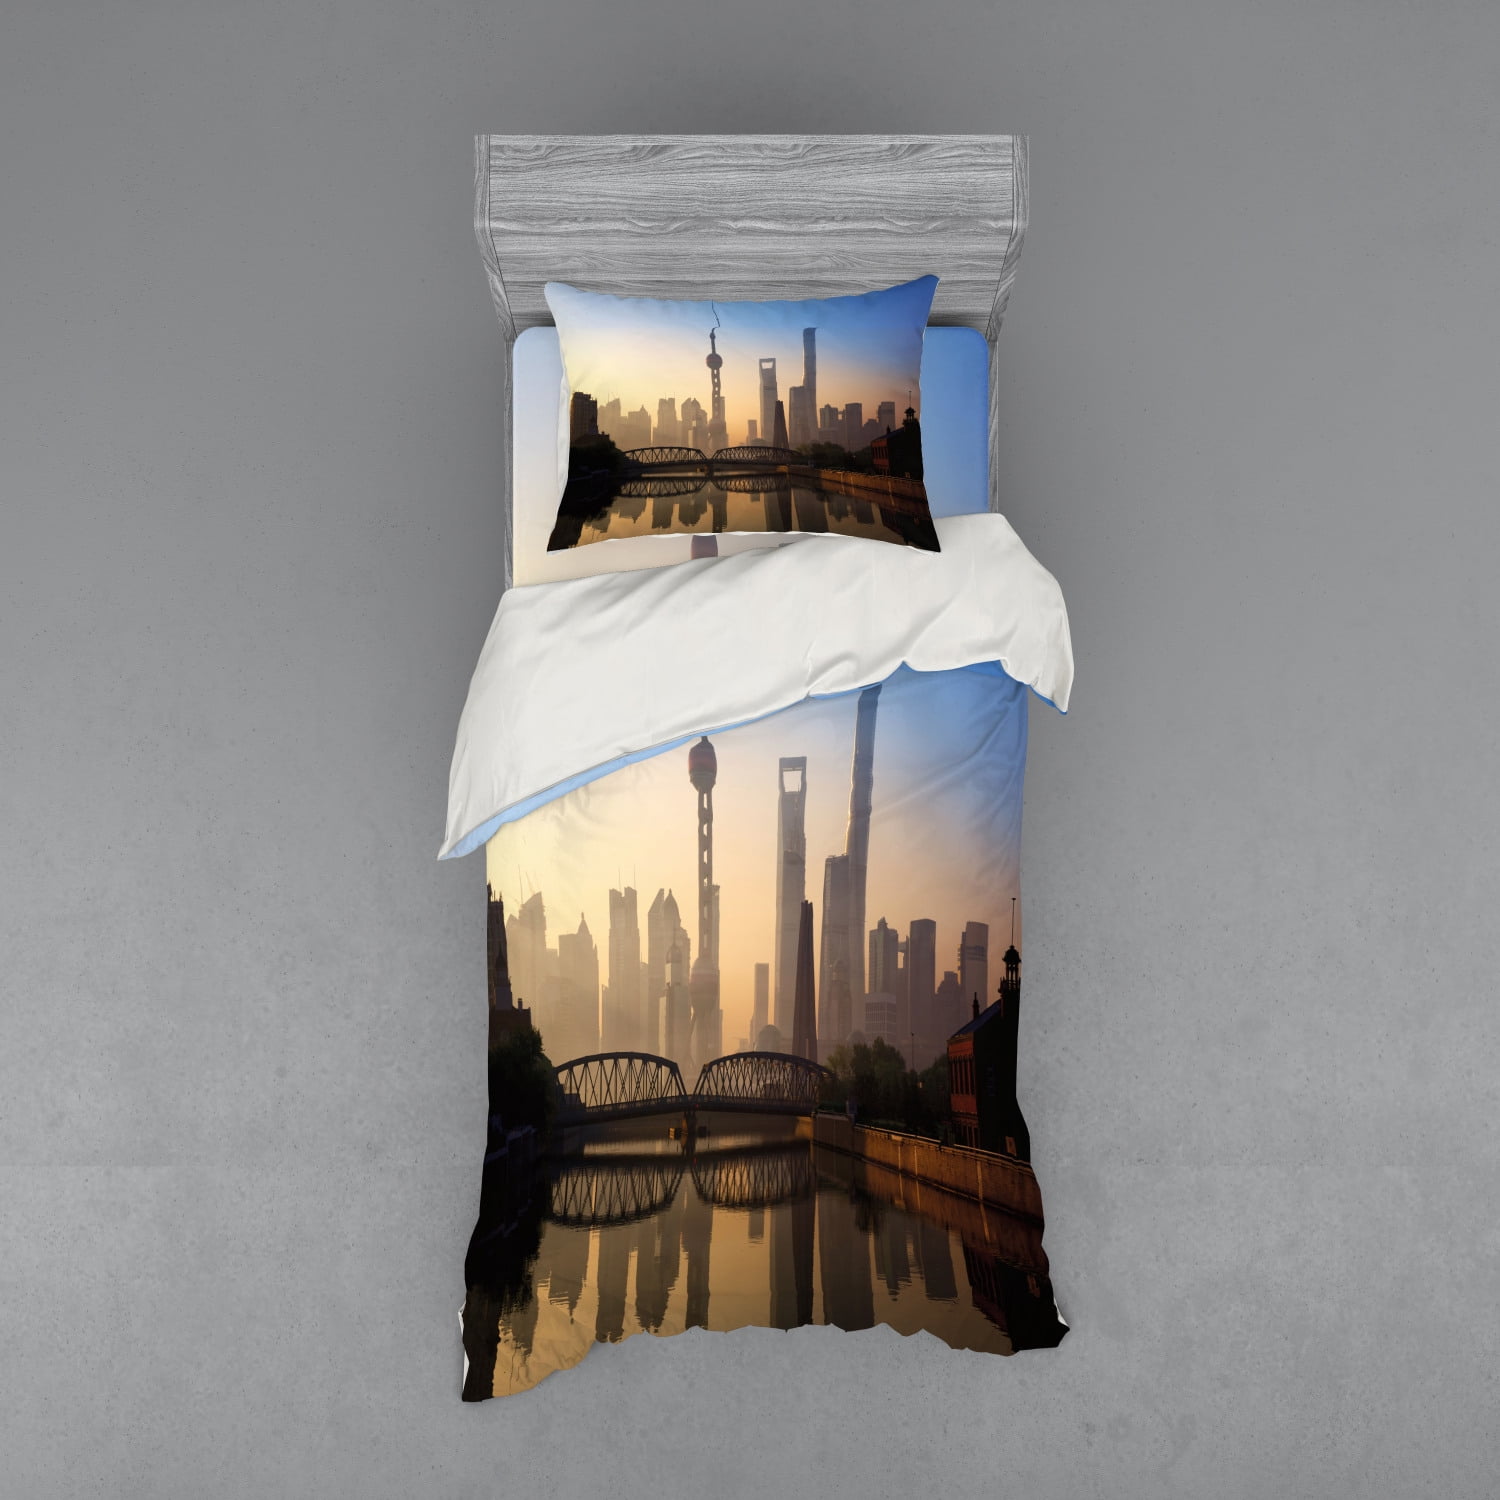 Landscape Duvet Cover Set Shanghai Skyline At Sunrise With